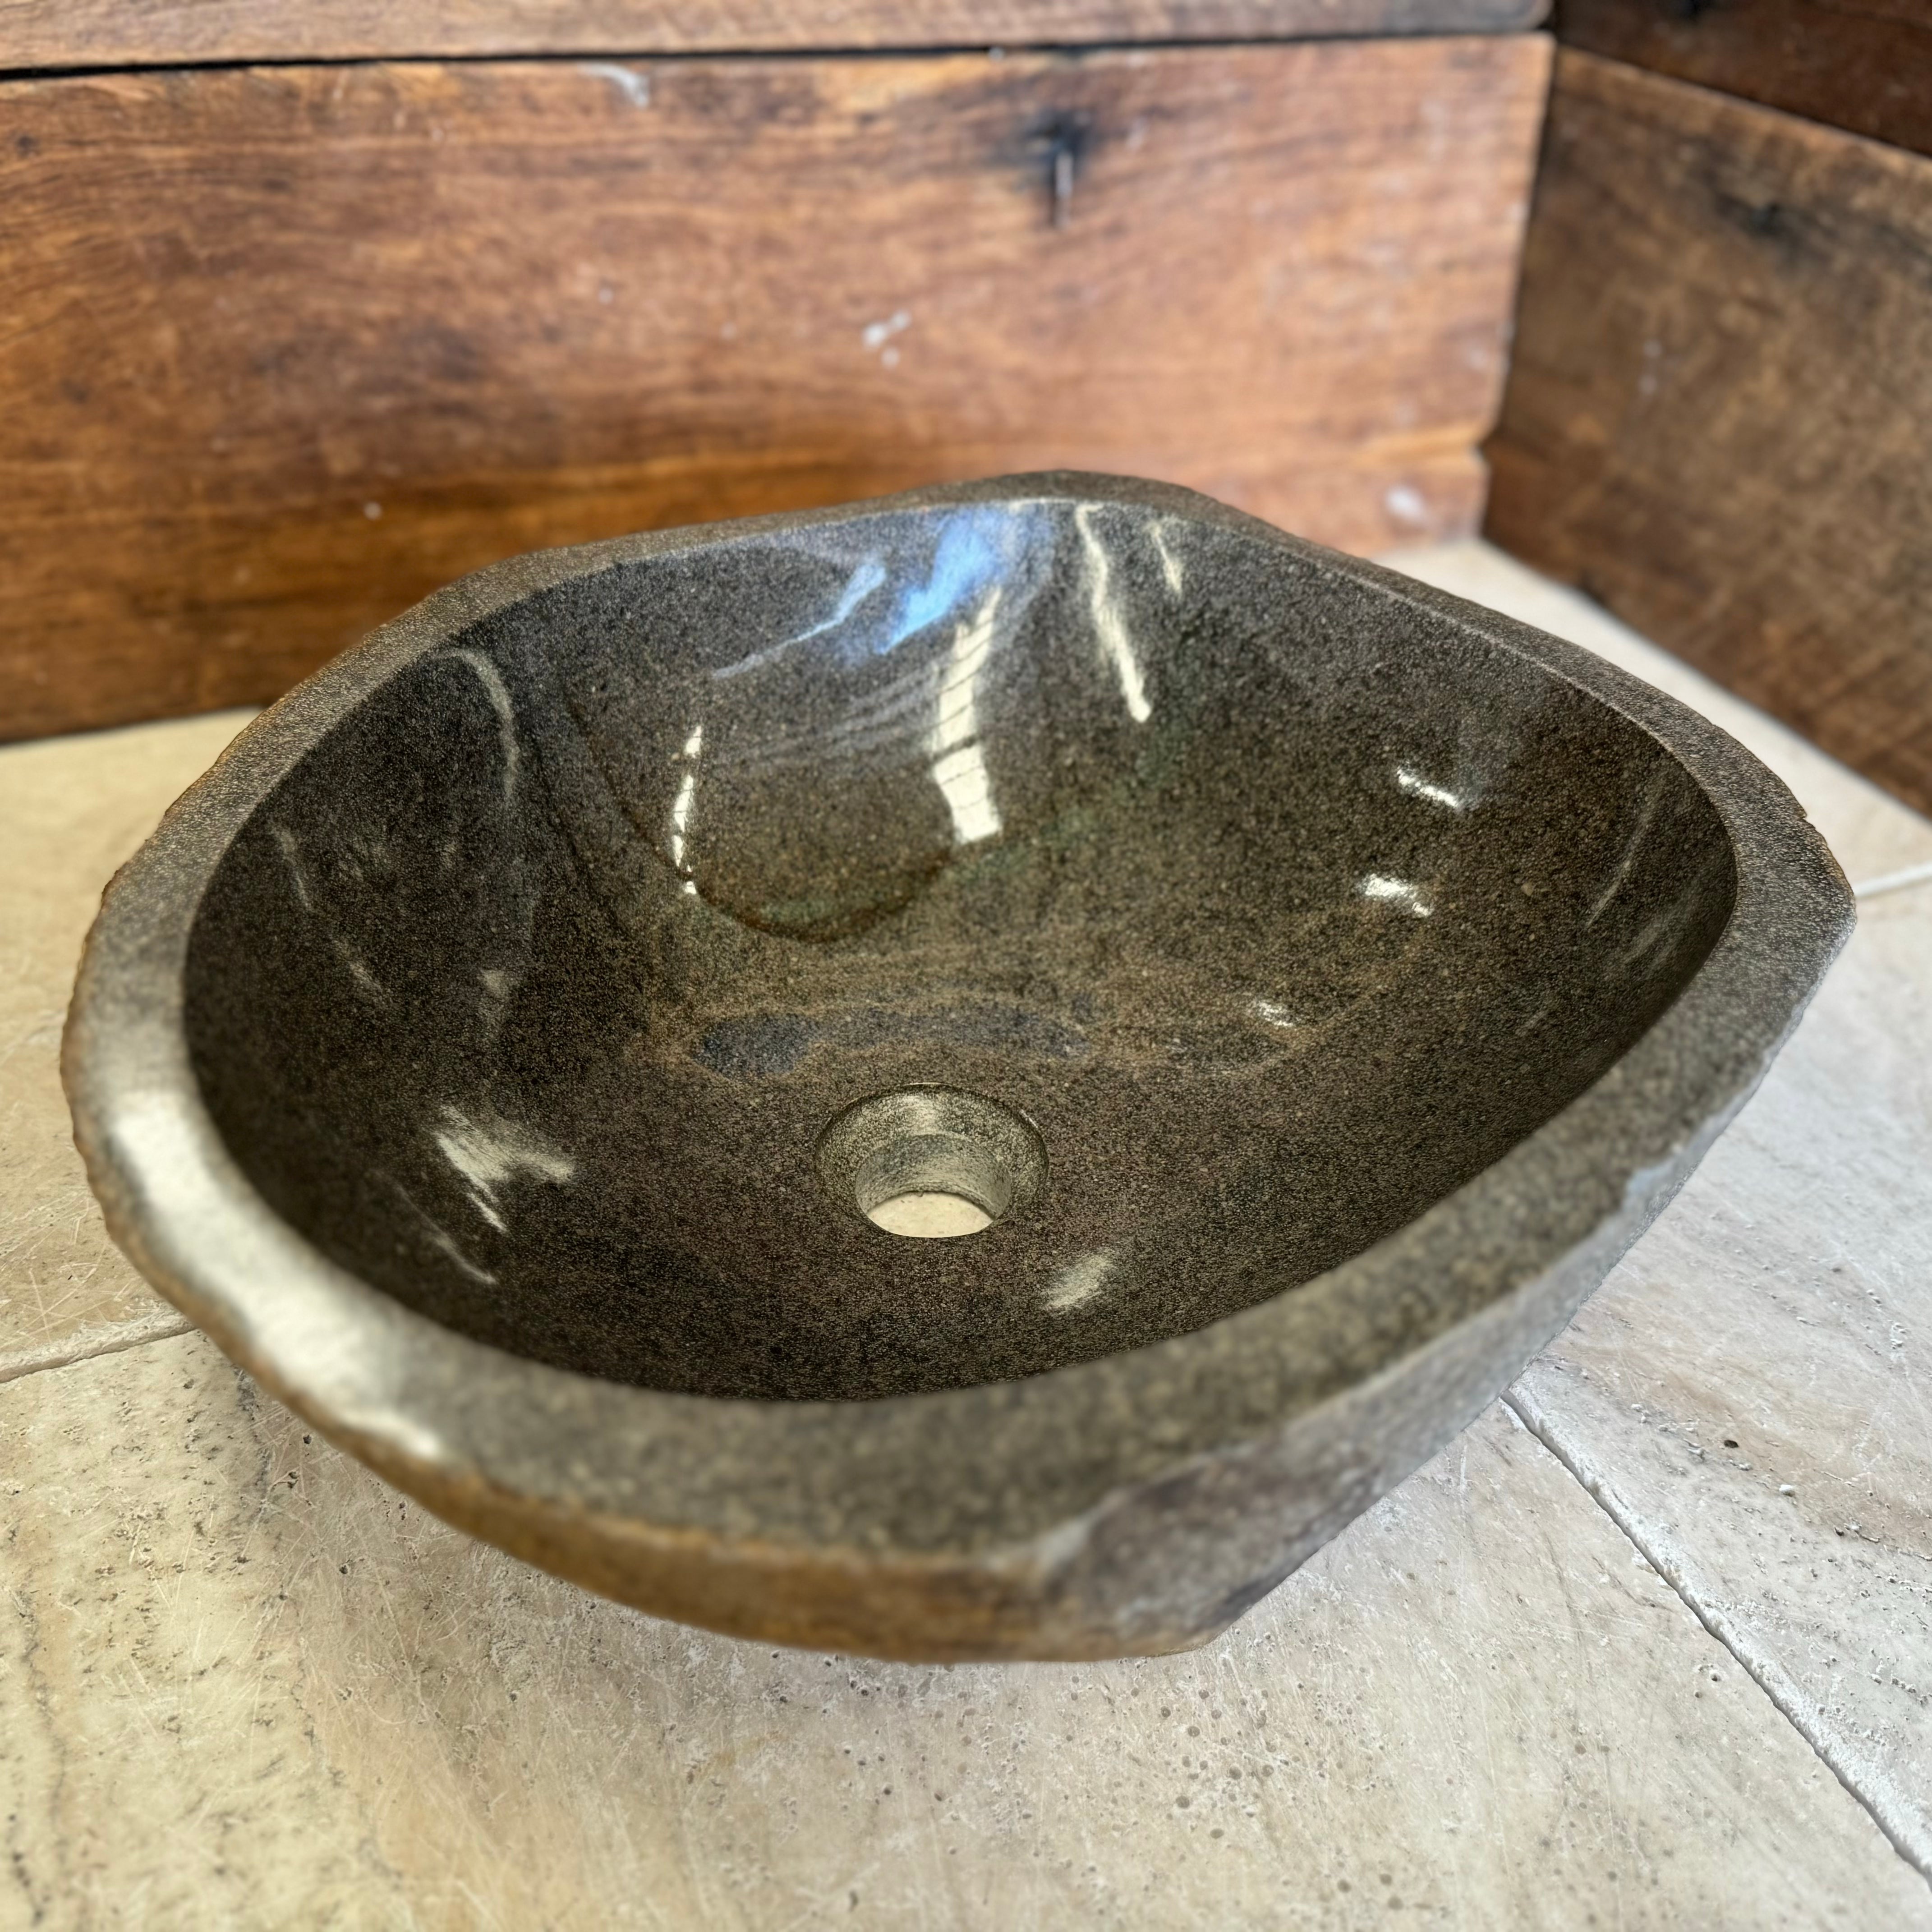 Handmade Natural Oval River Stone Bathroom Basin - RM2306039